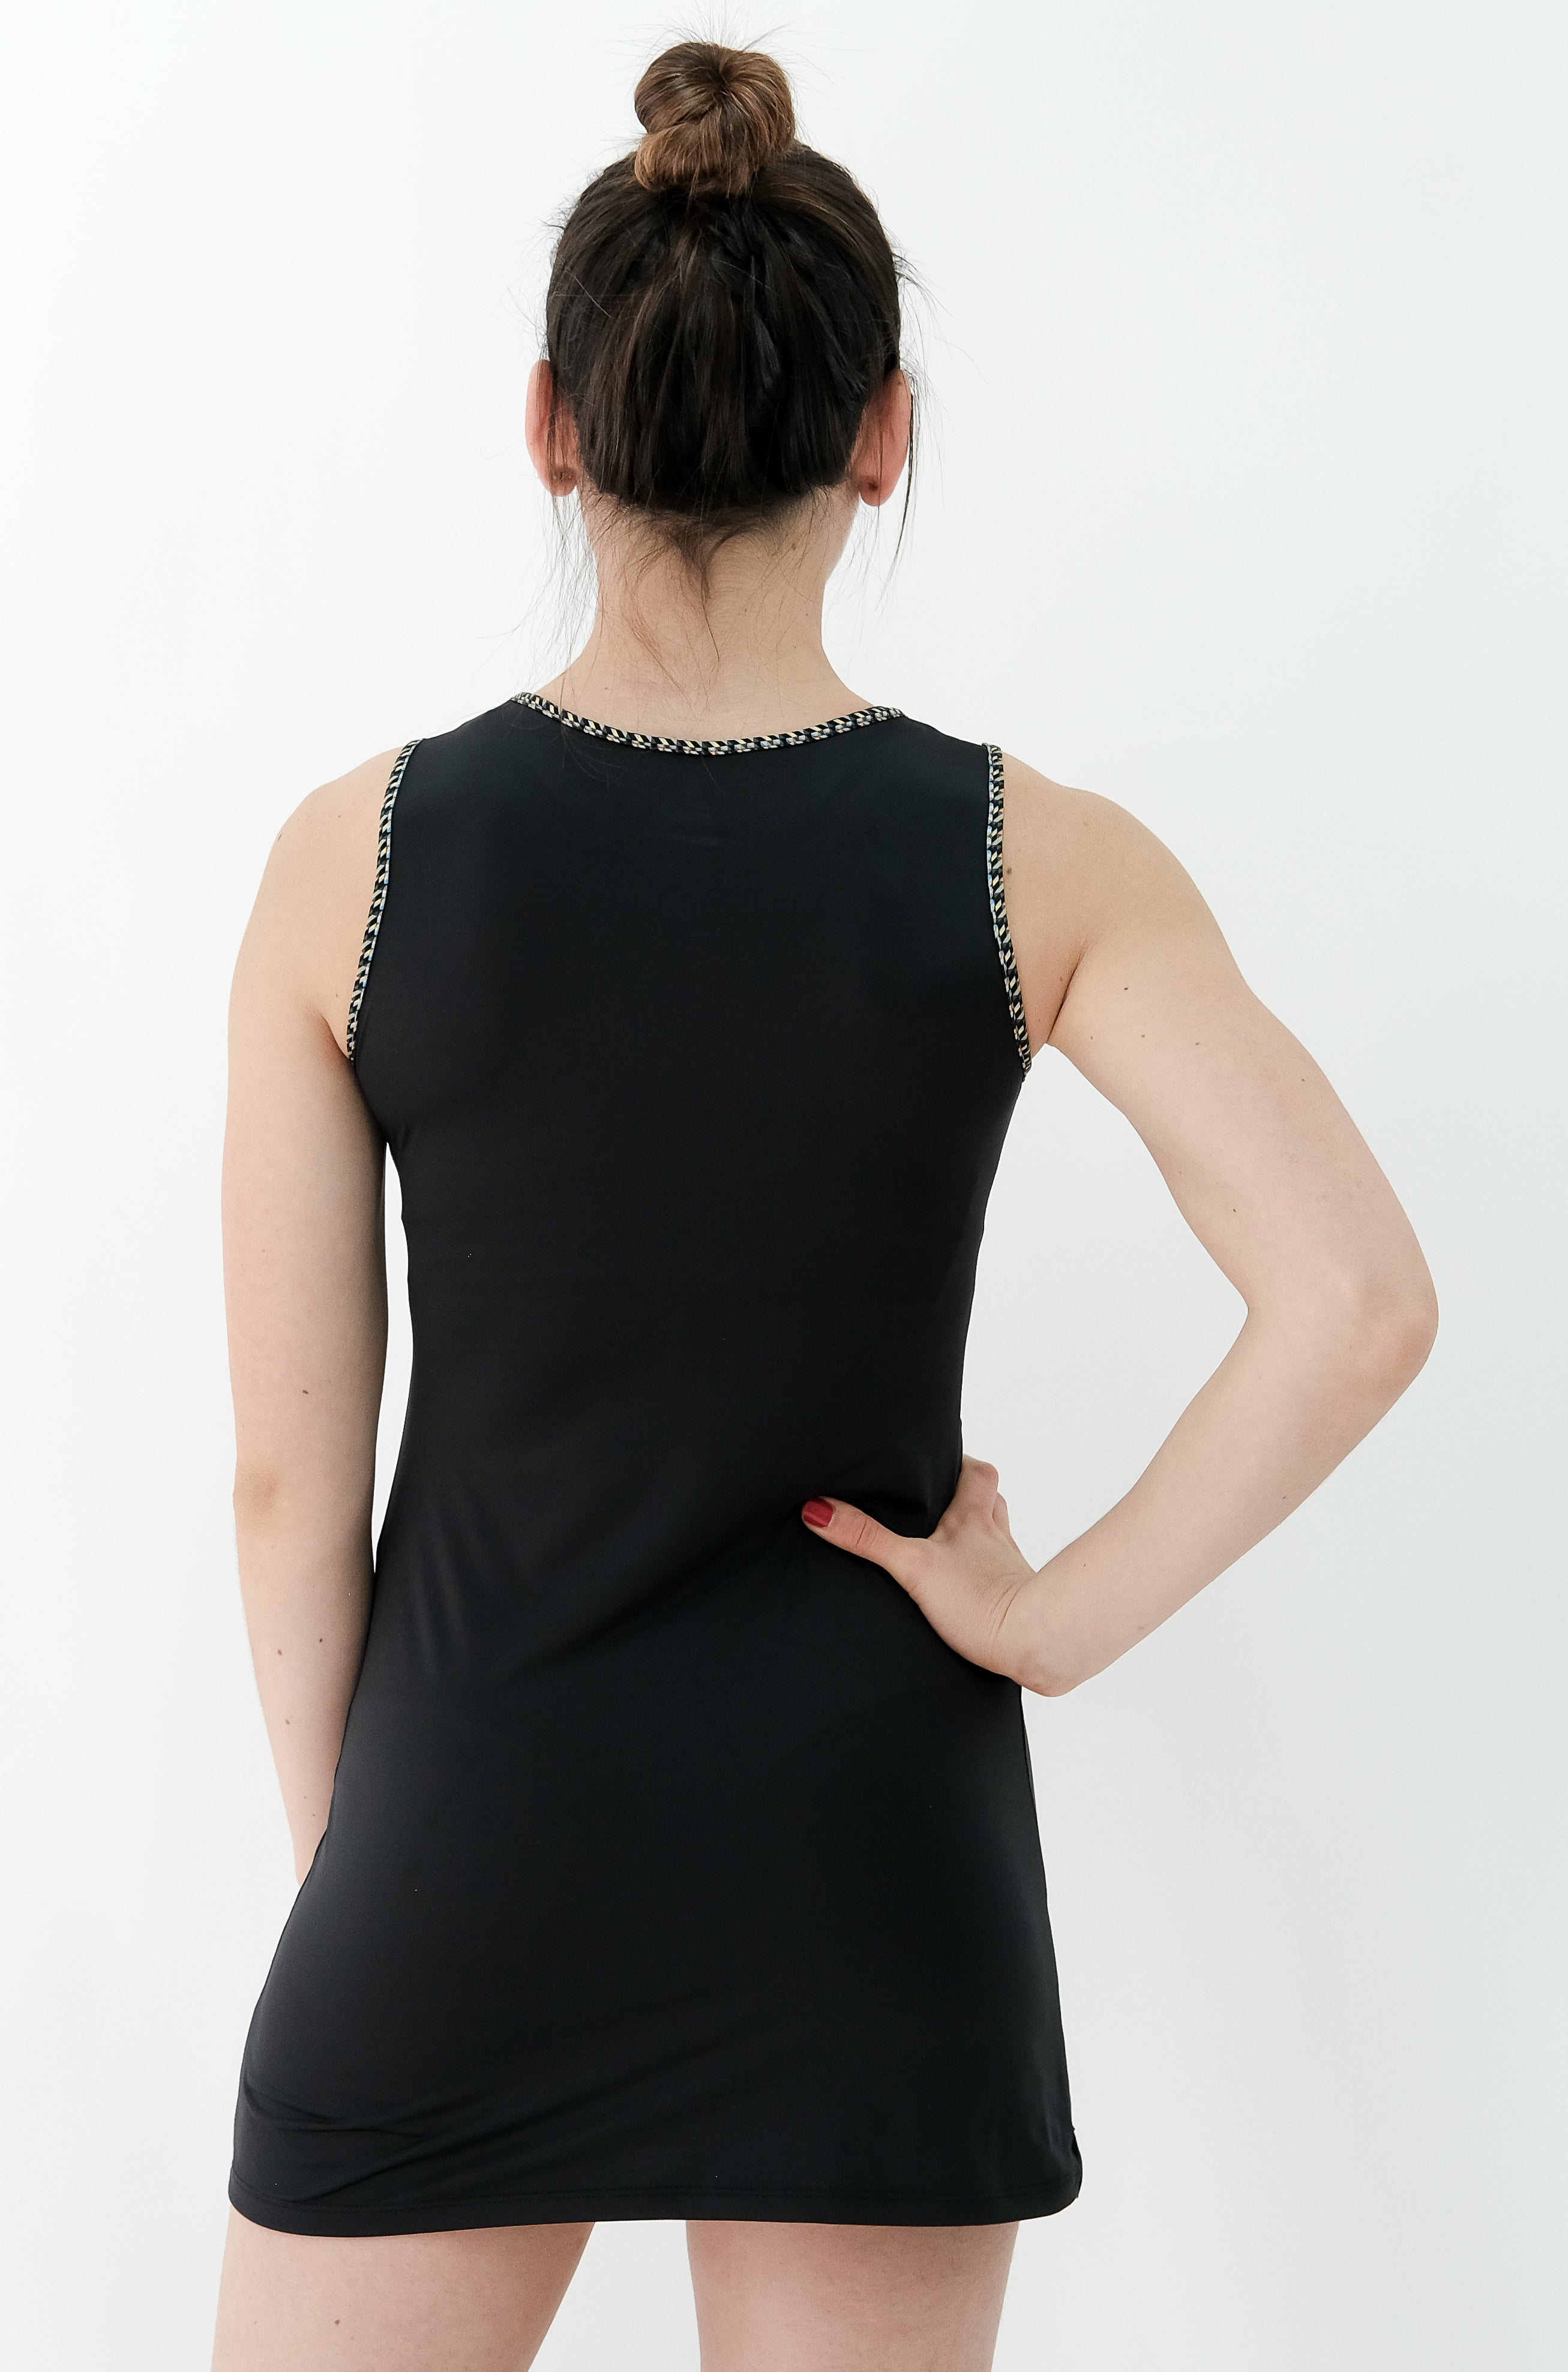 Women's sleeveless recycled dress